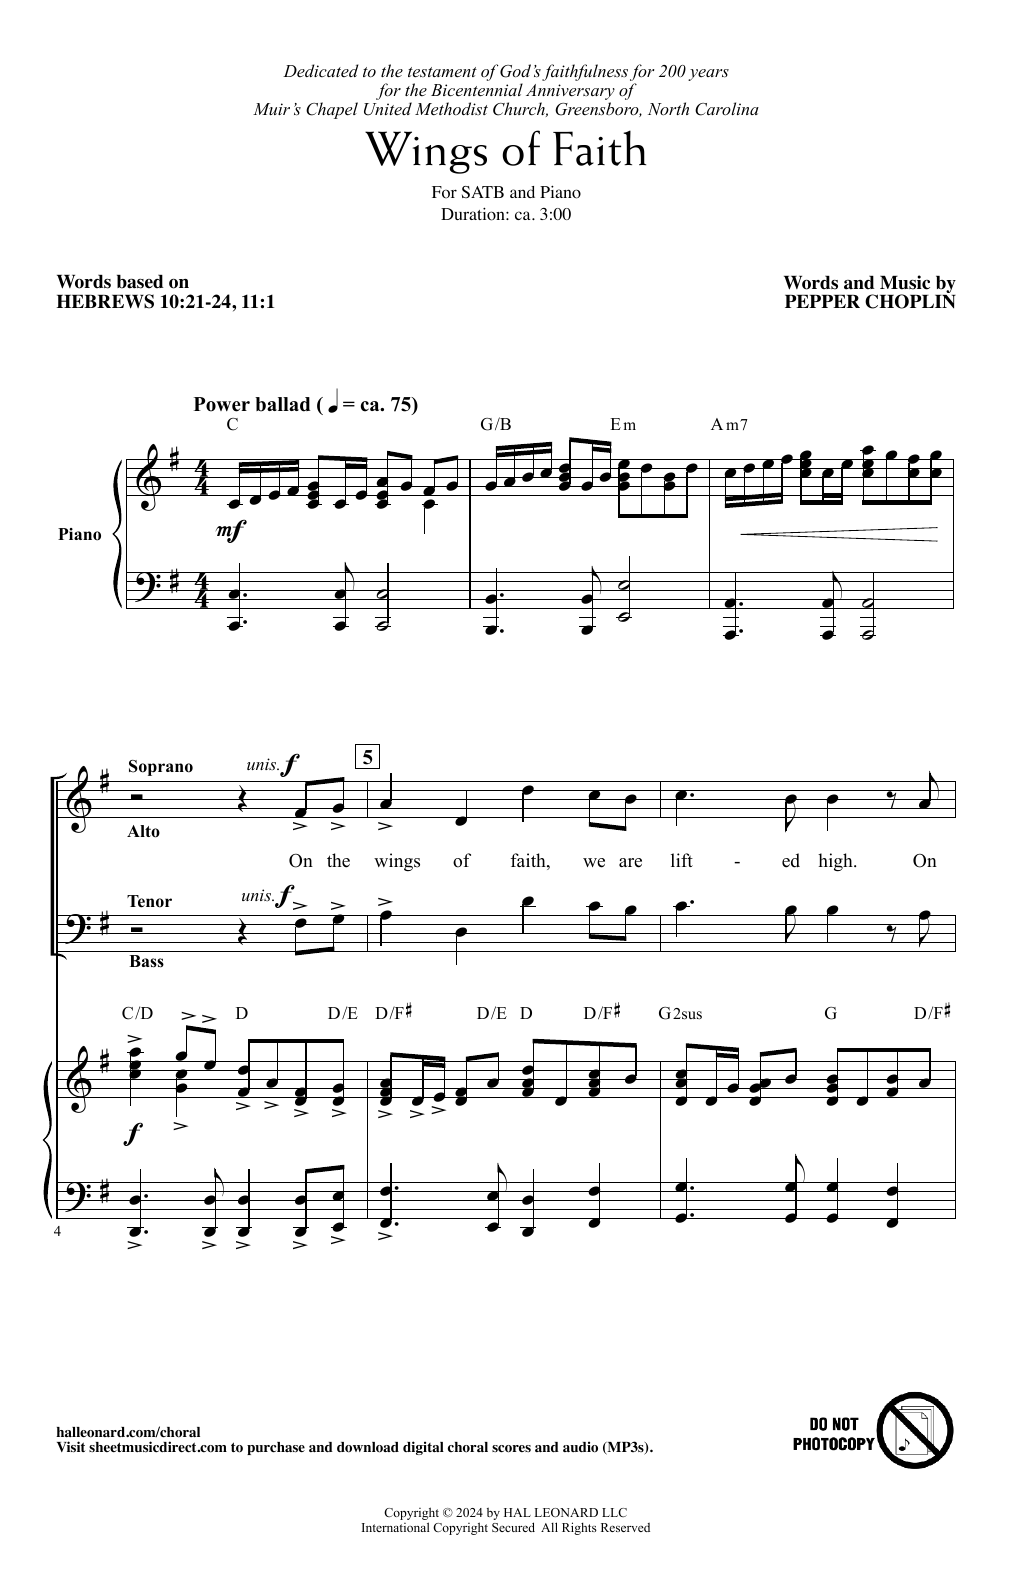 Pepper Choplin Wings Of Faith Sheet Music Notes & Chords for SATB Choir - Download or Print PDF